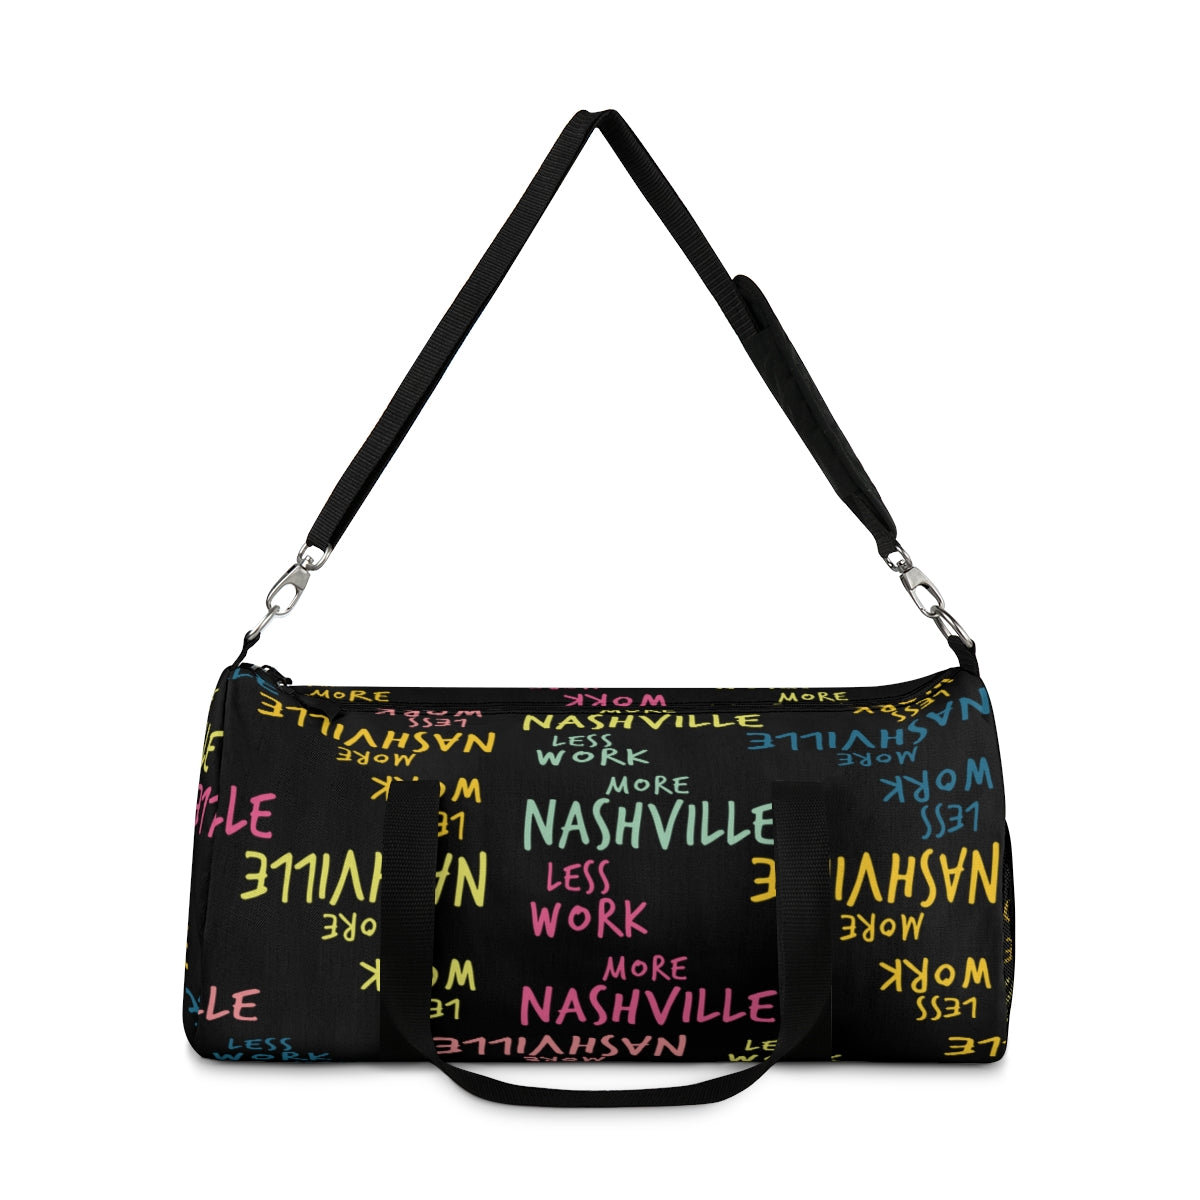 Less Work™ More Nashville Duffel Bag